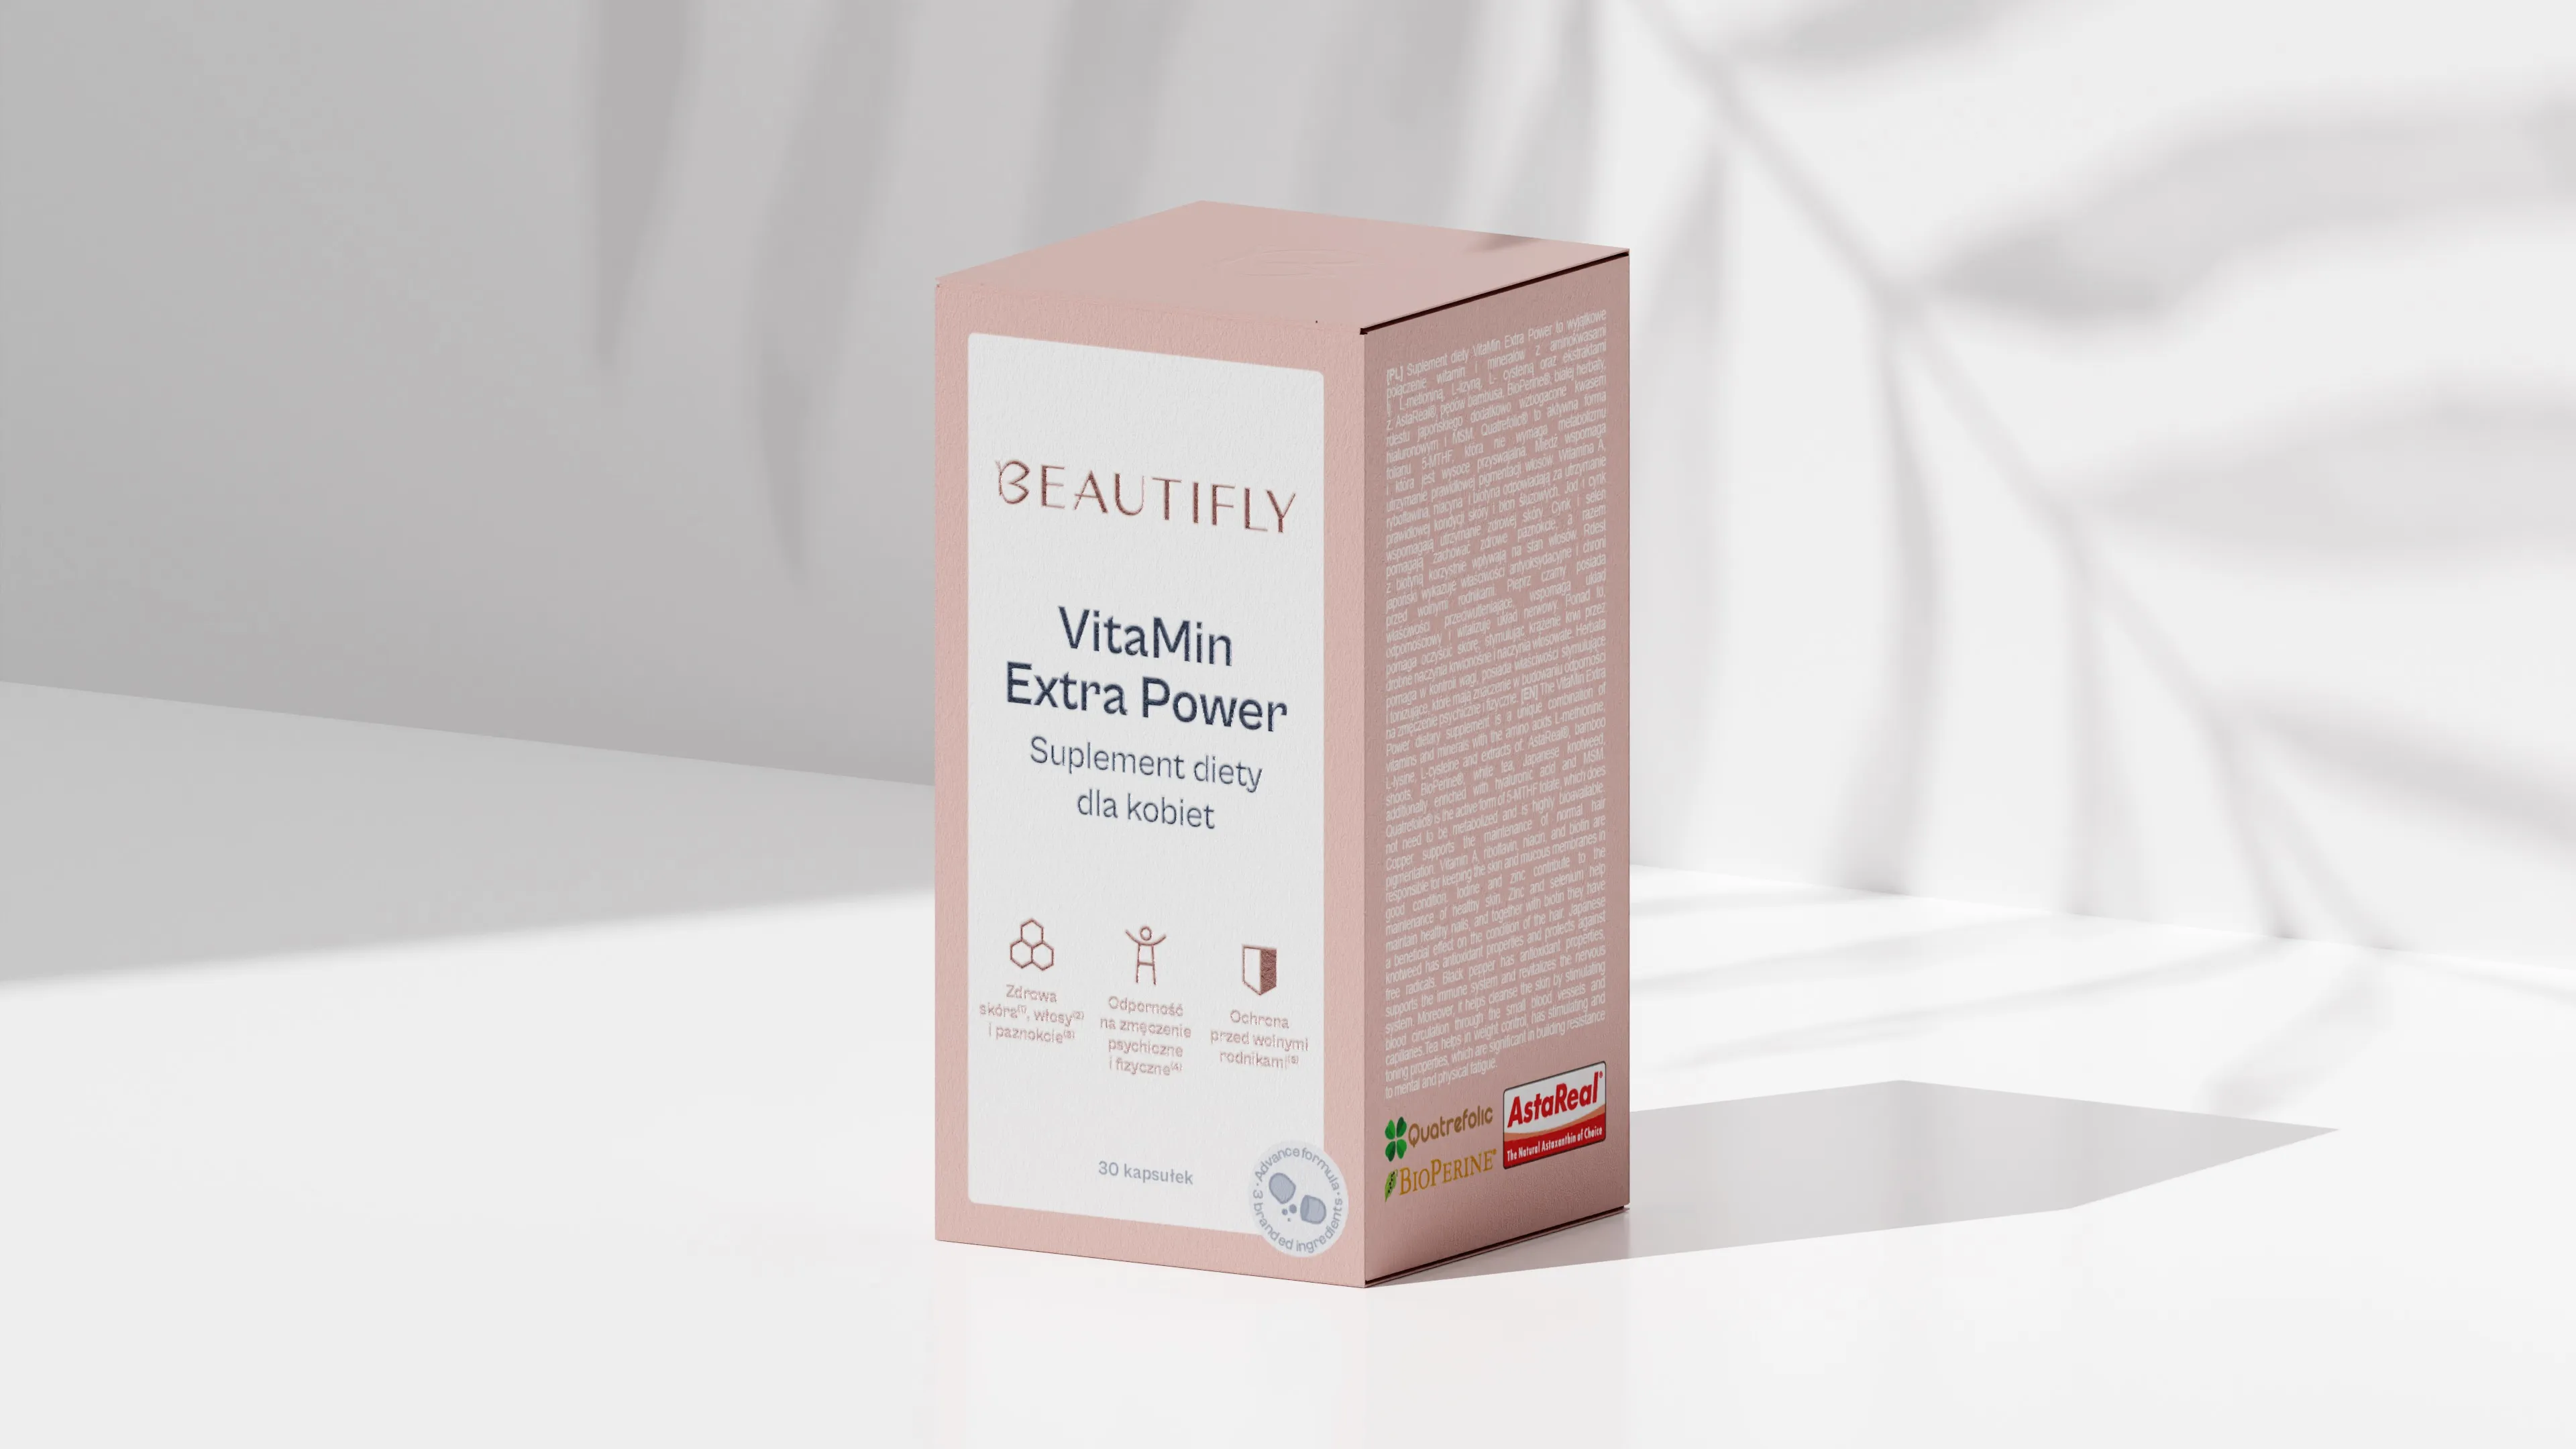 Beautifly VitaMin Extra Power dla kobiet, 30 kapsułek 